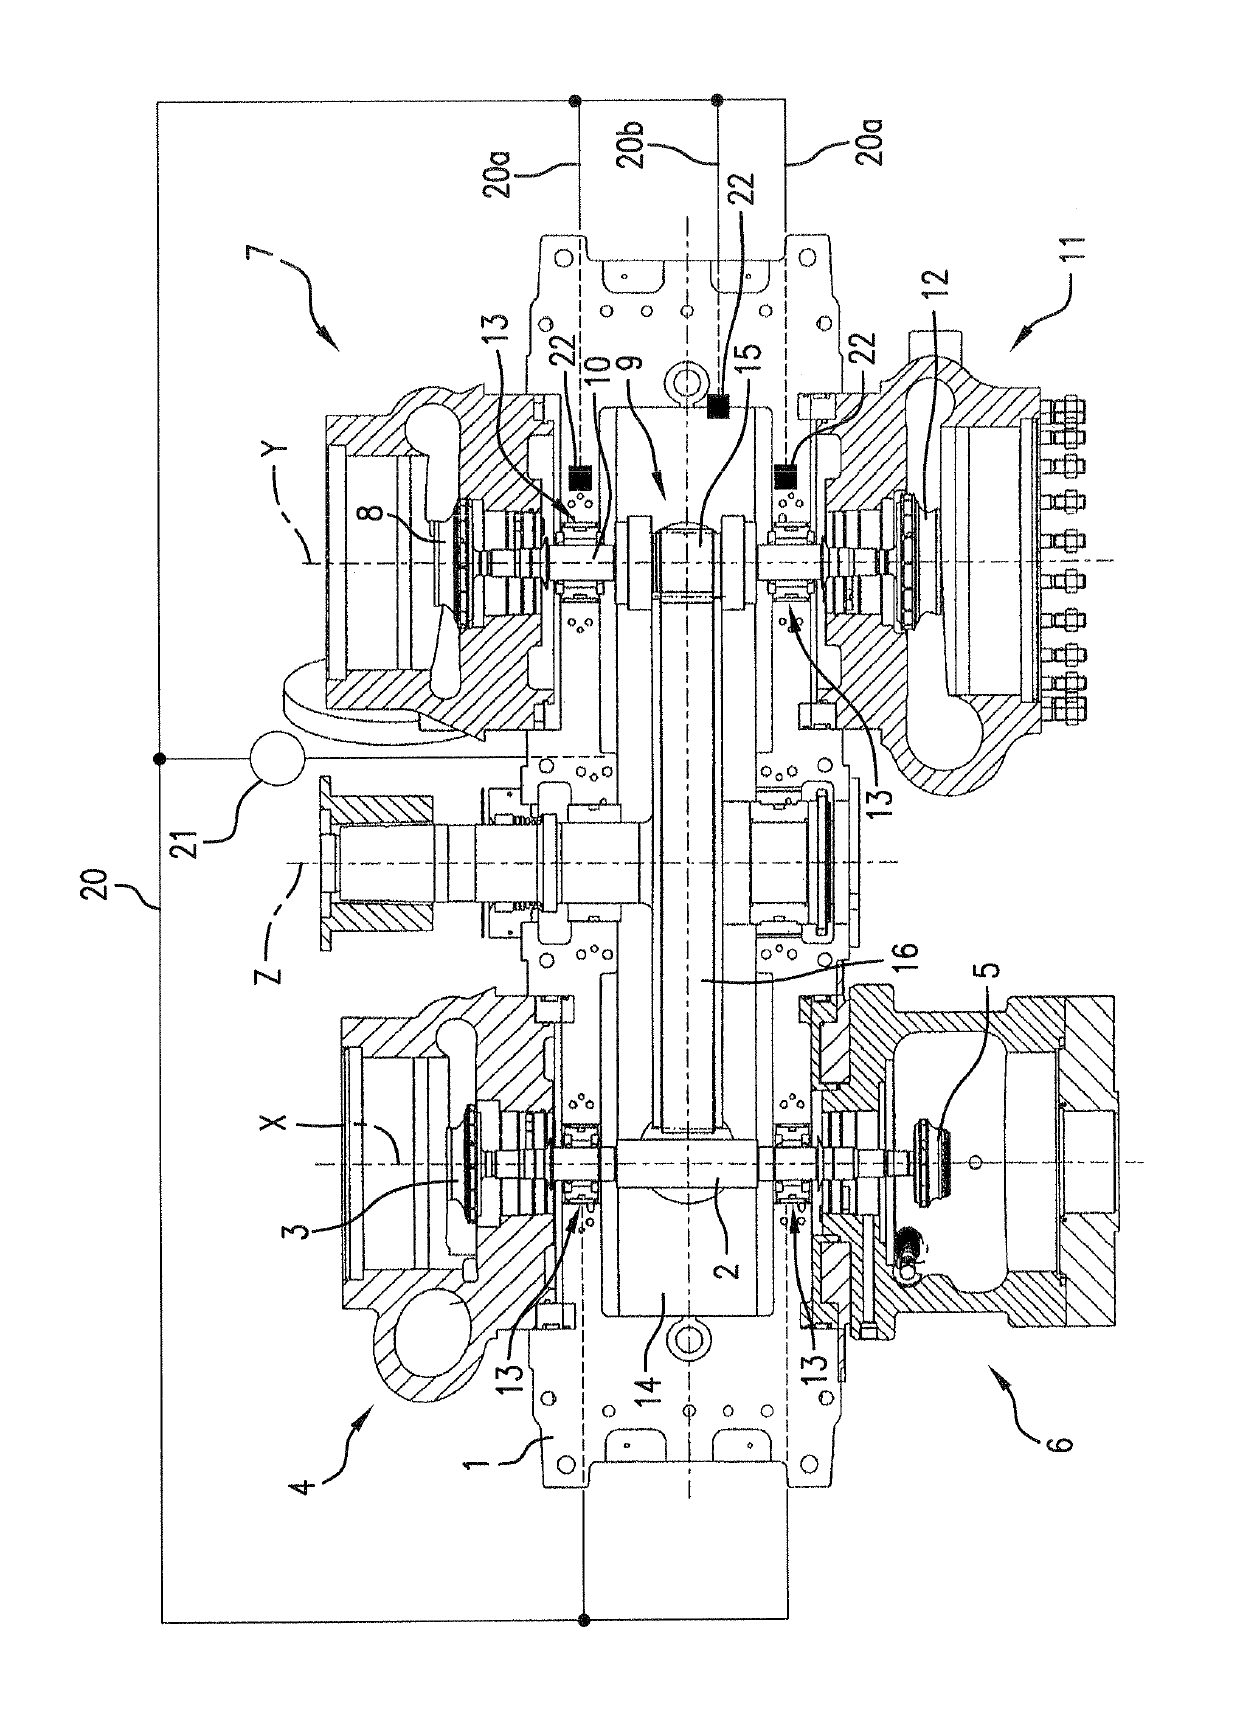 Turbomachine arrangement